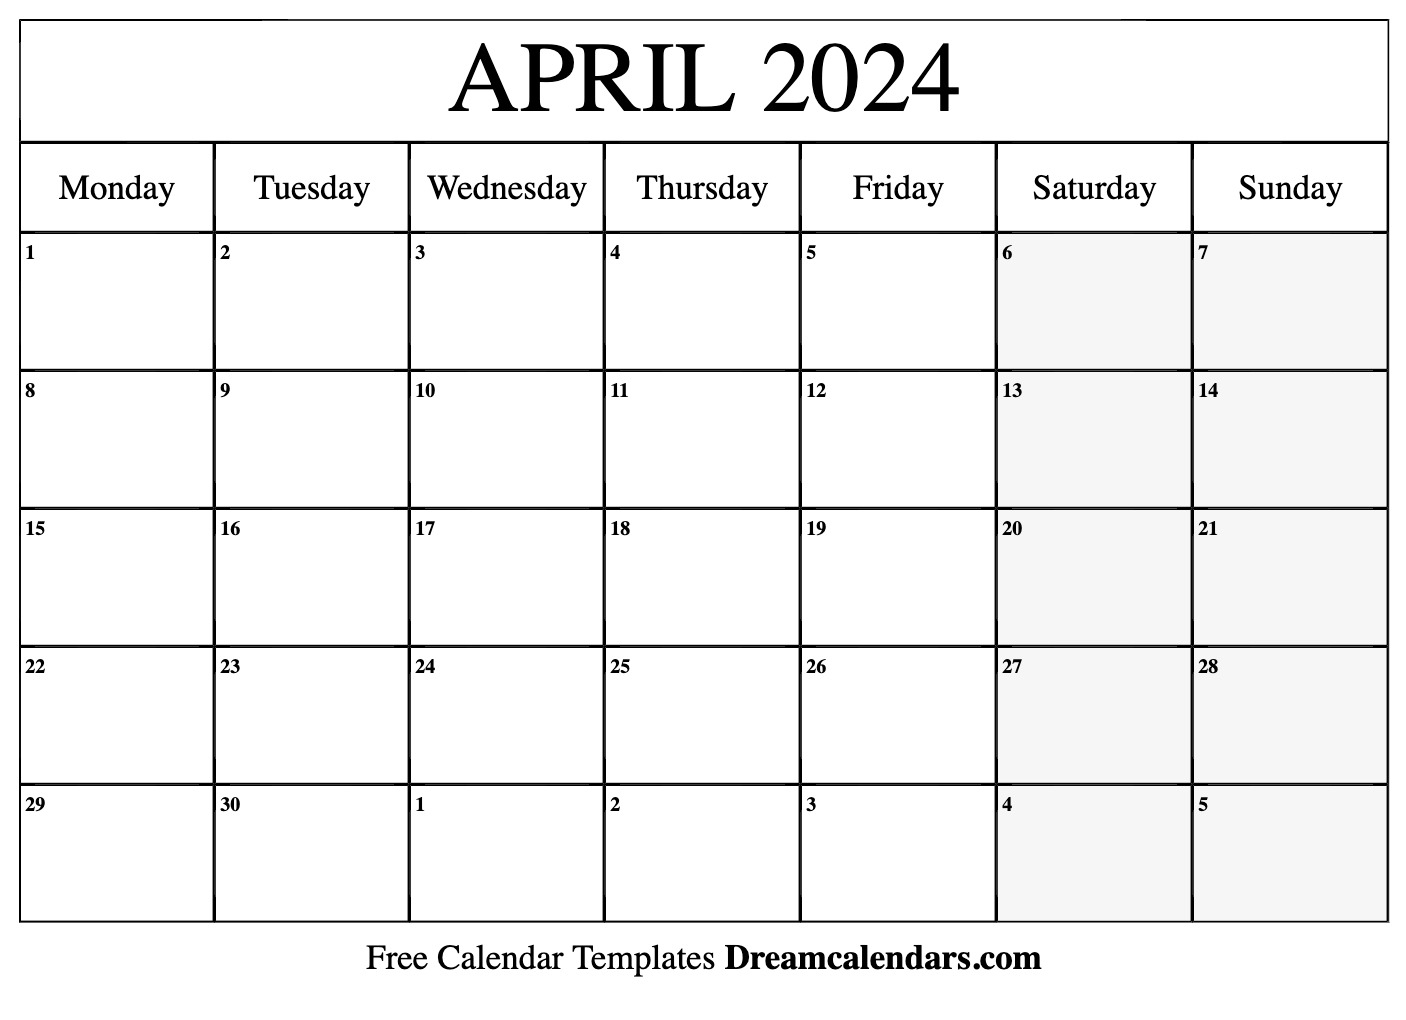 April 2024 Calendar | Free Blank Printable With Holidays for April Calendar 2024 Printable Free